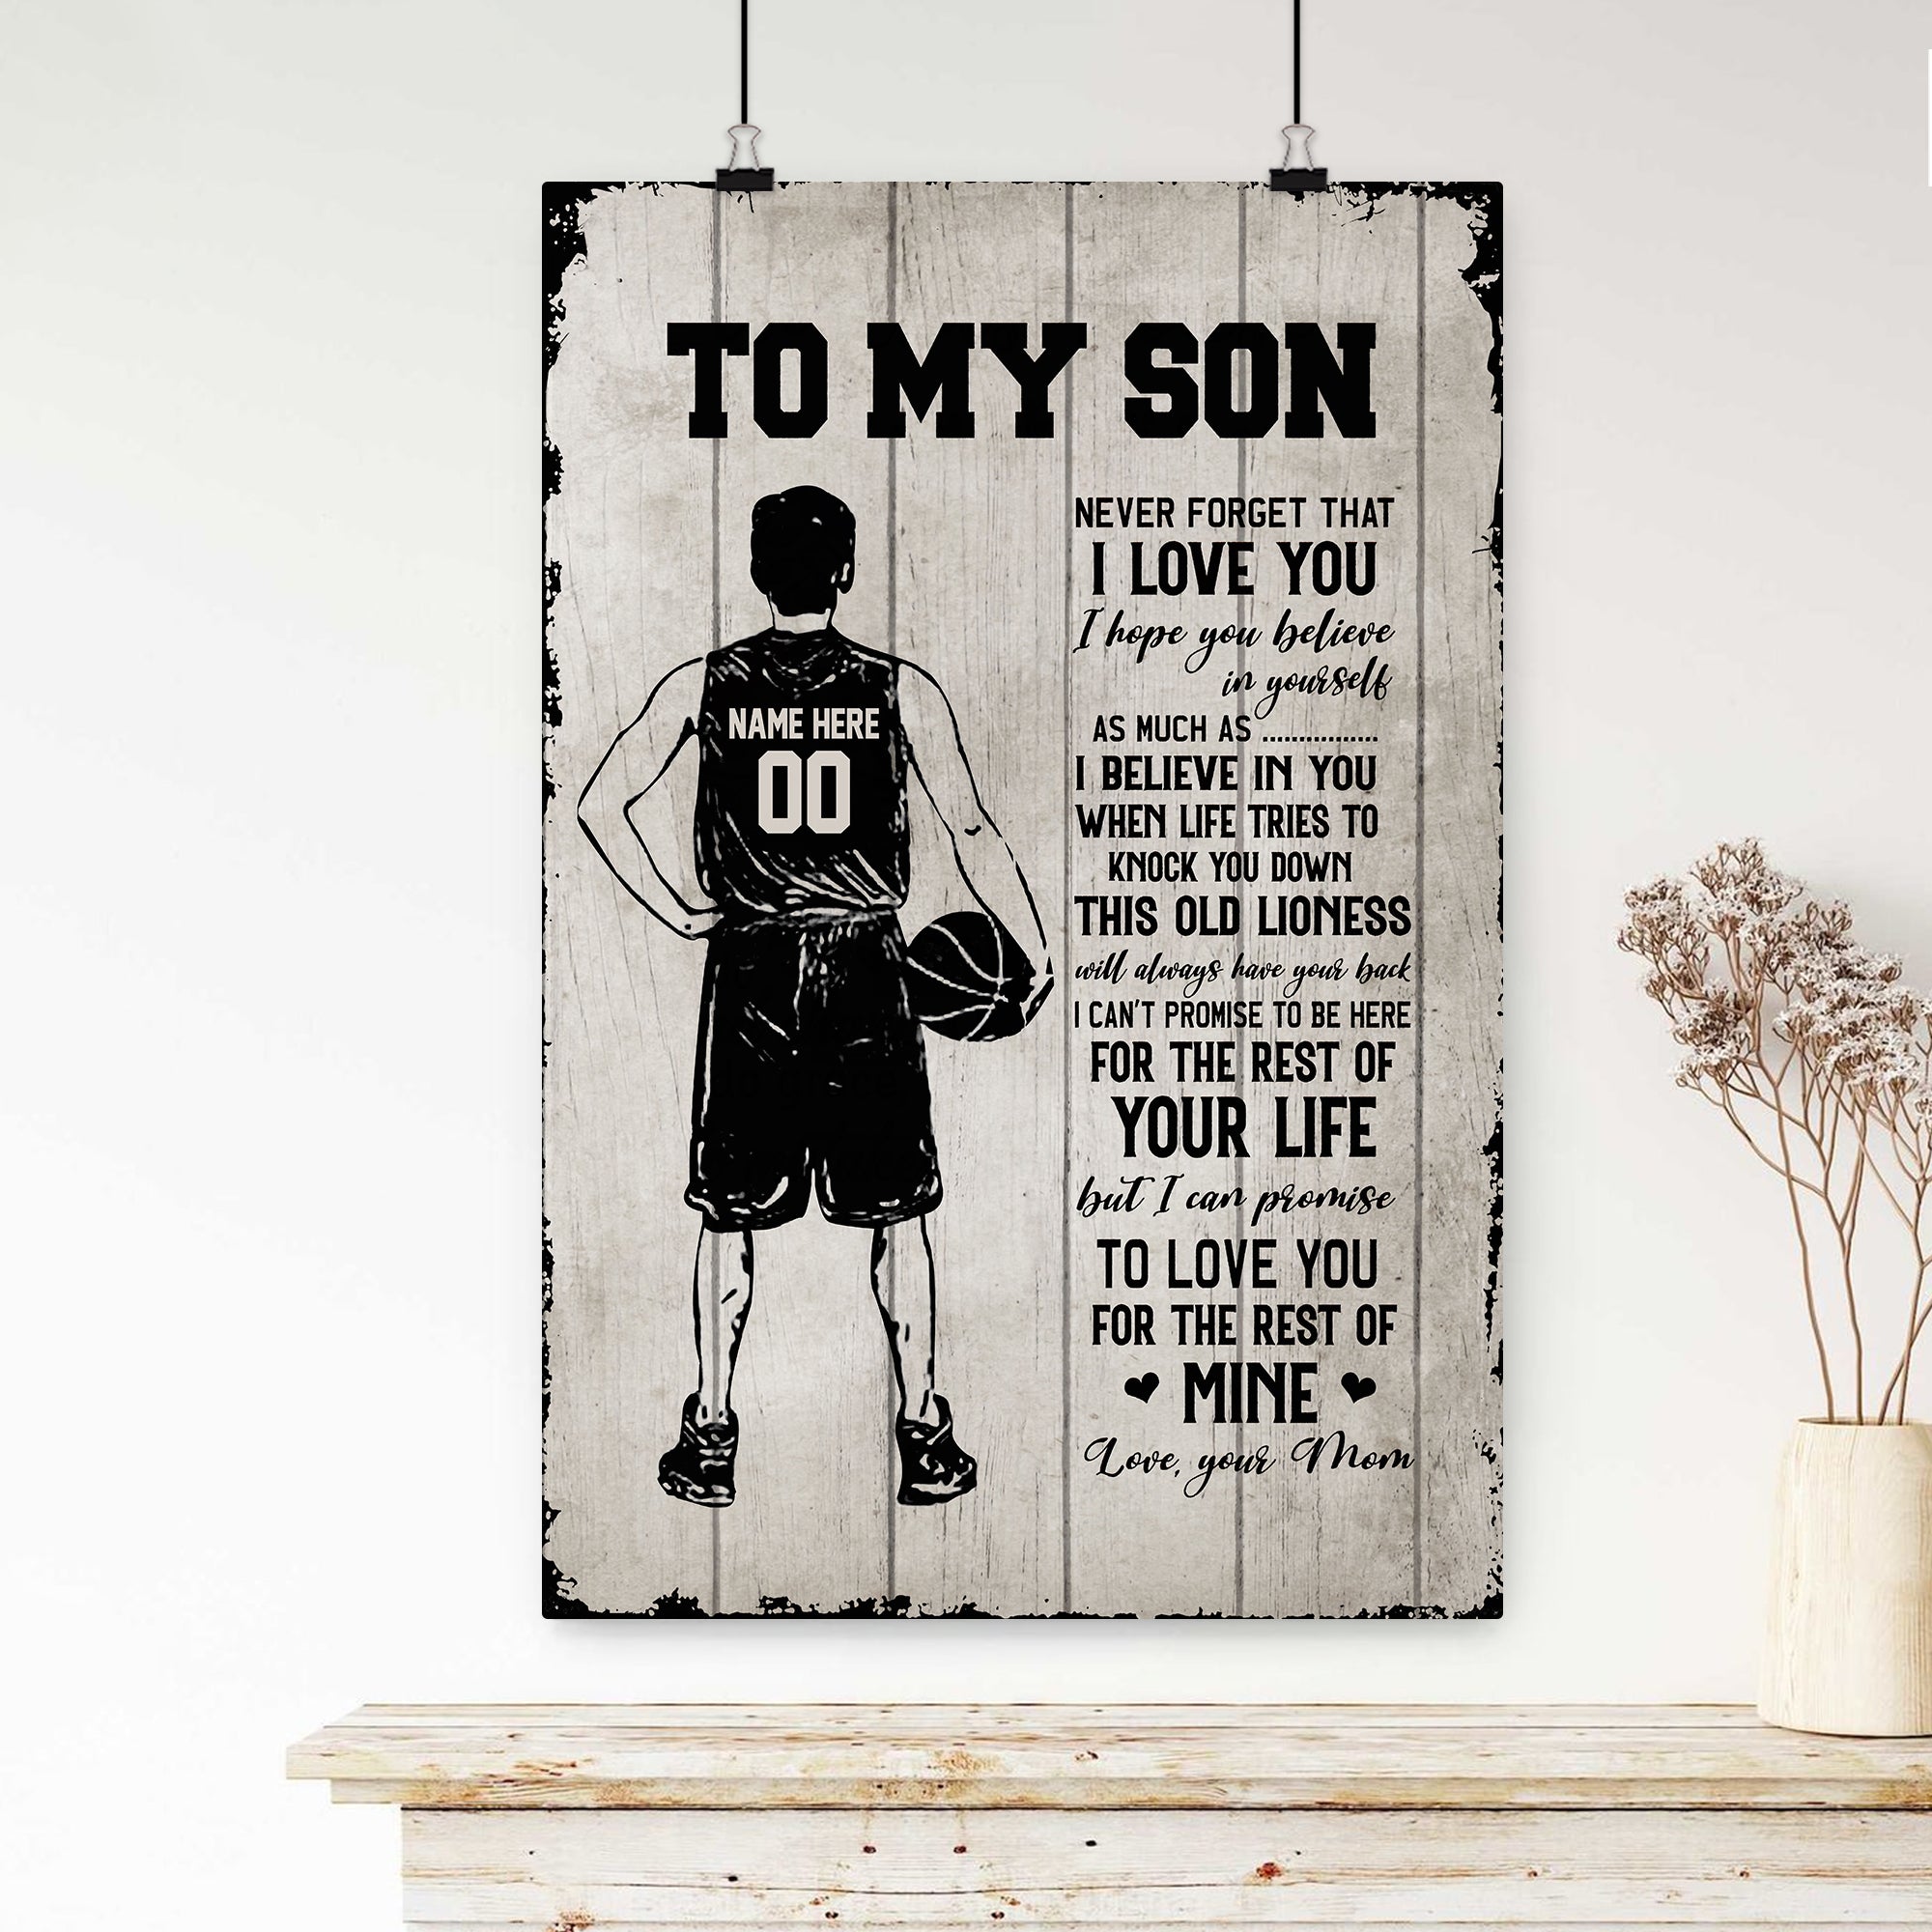 Custom Poster Prints Basketball Gifts Wall Art